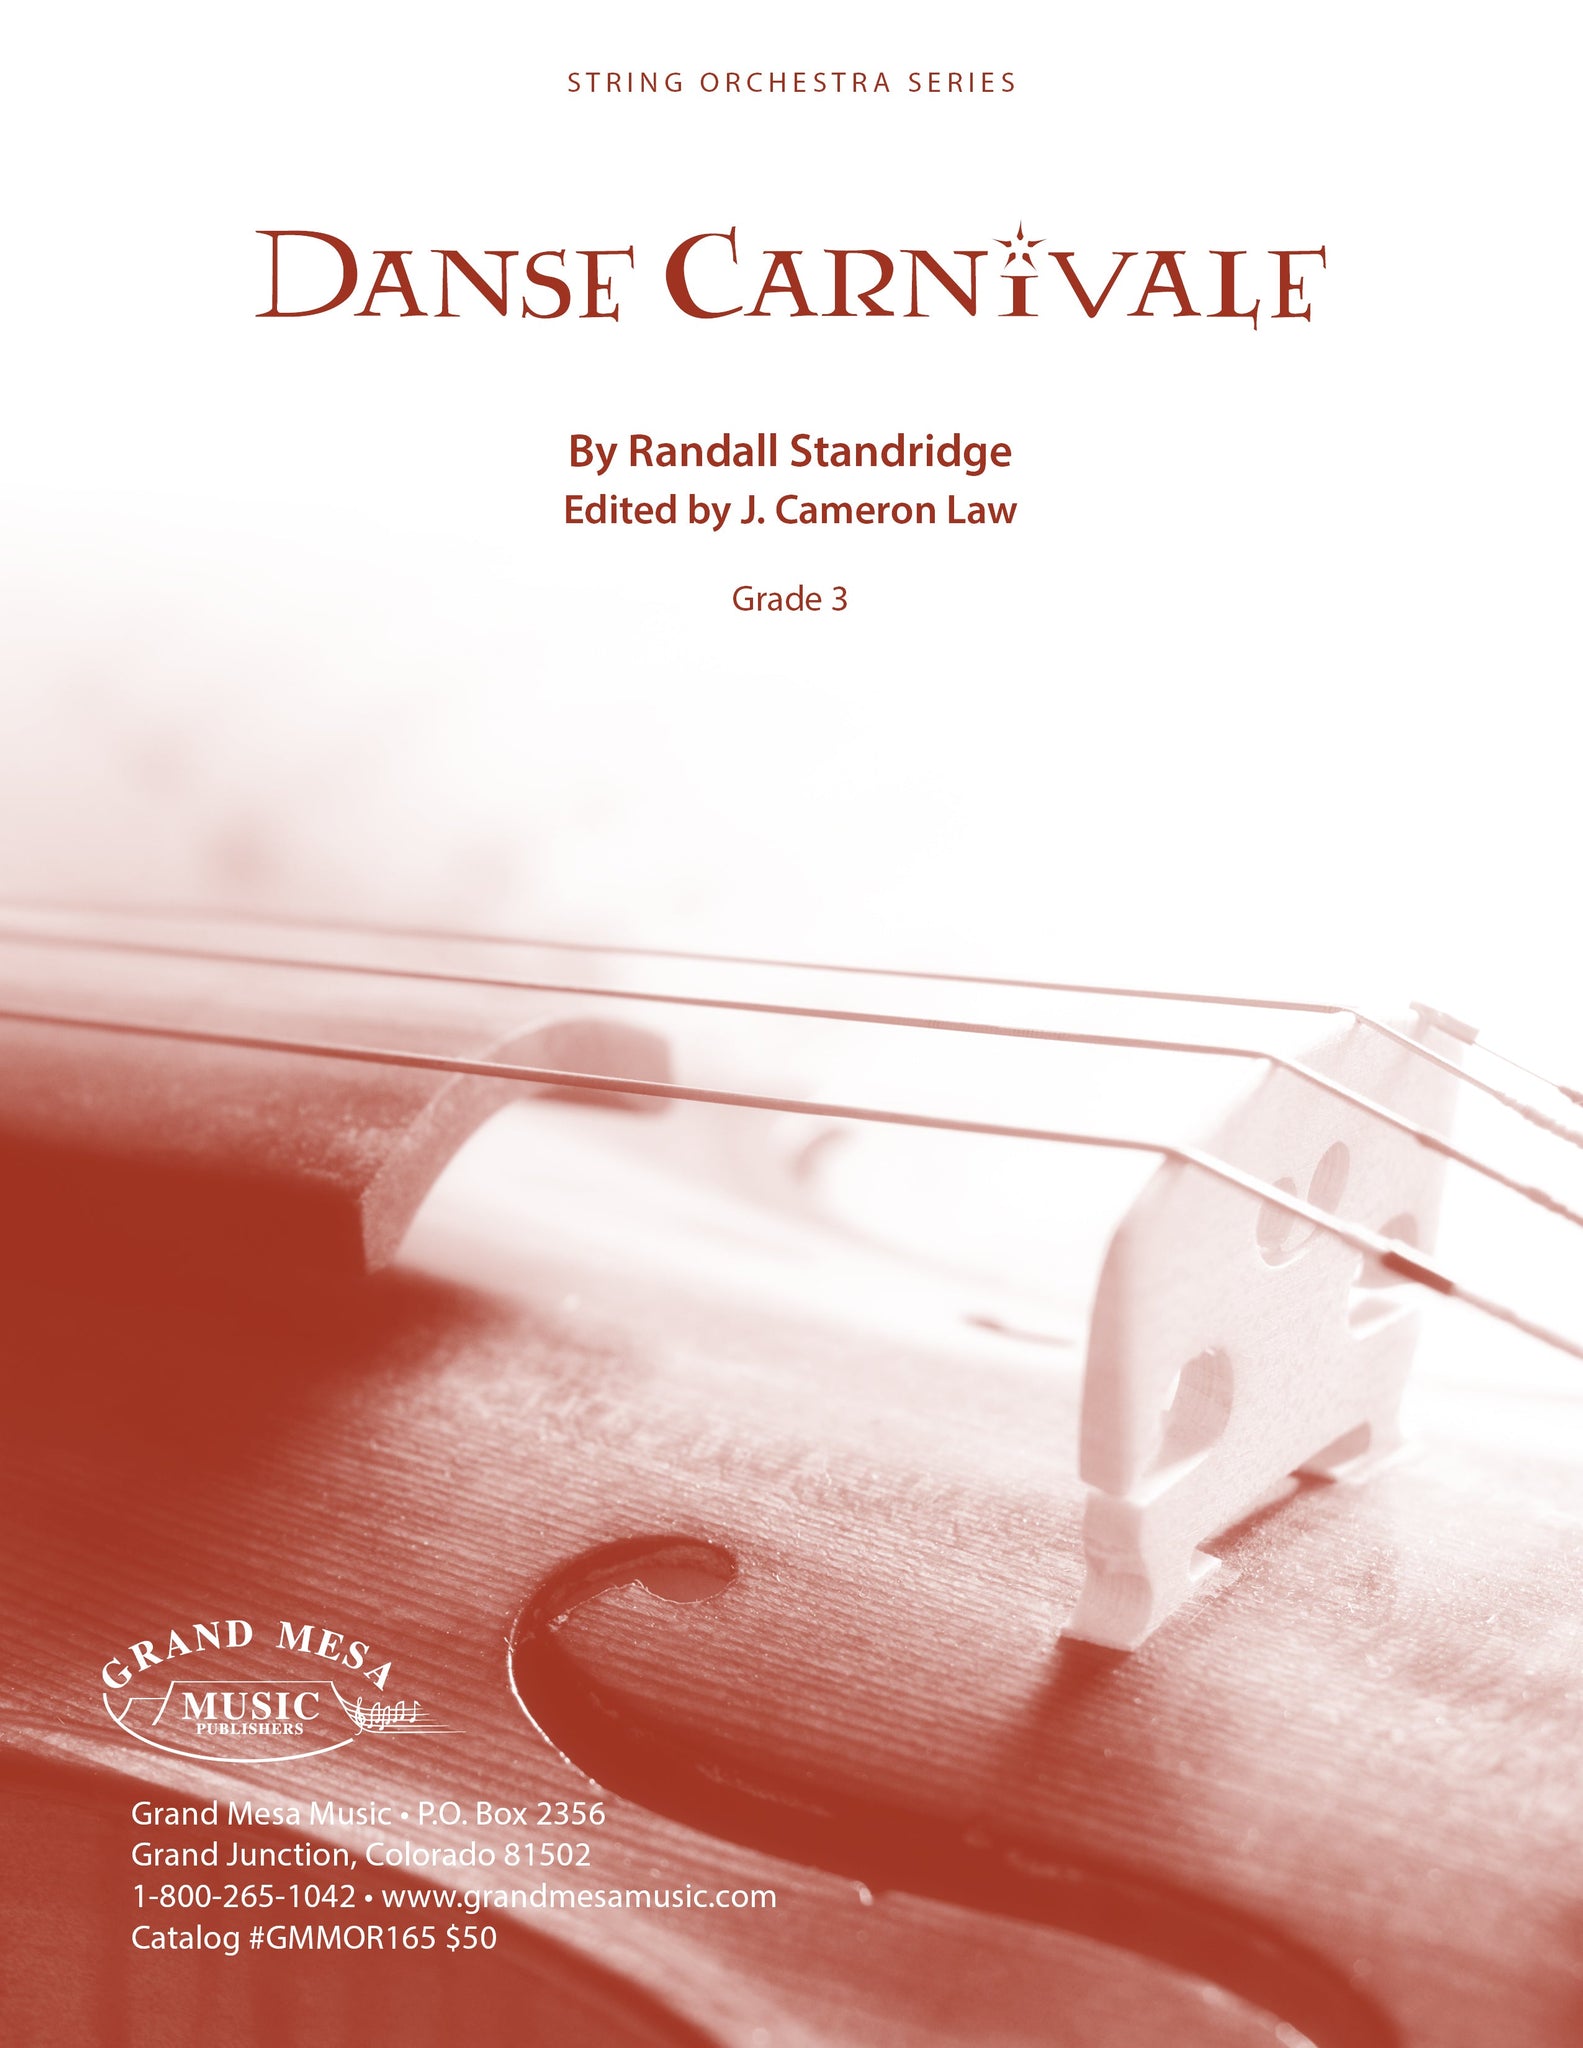 Strings sheet music cover of Danse Carnivale, composed by Randall D. Standridge.